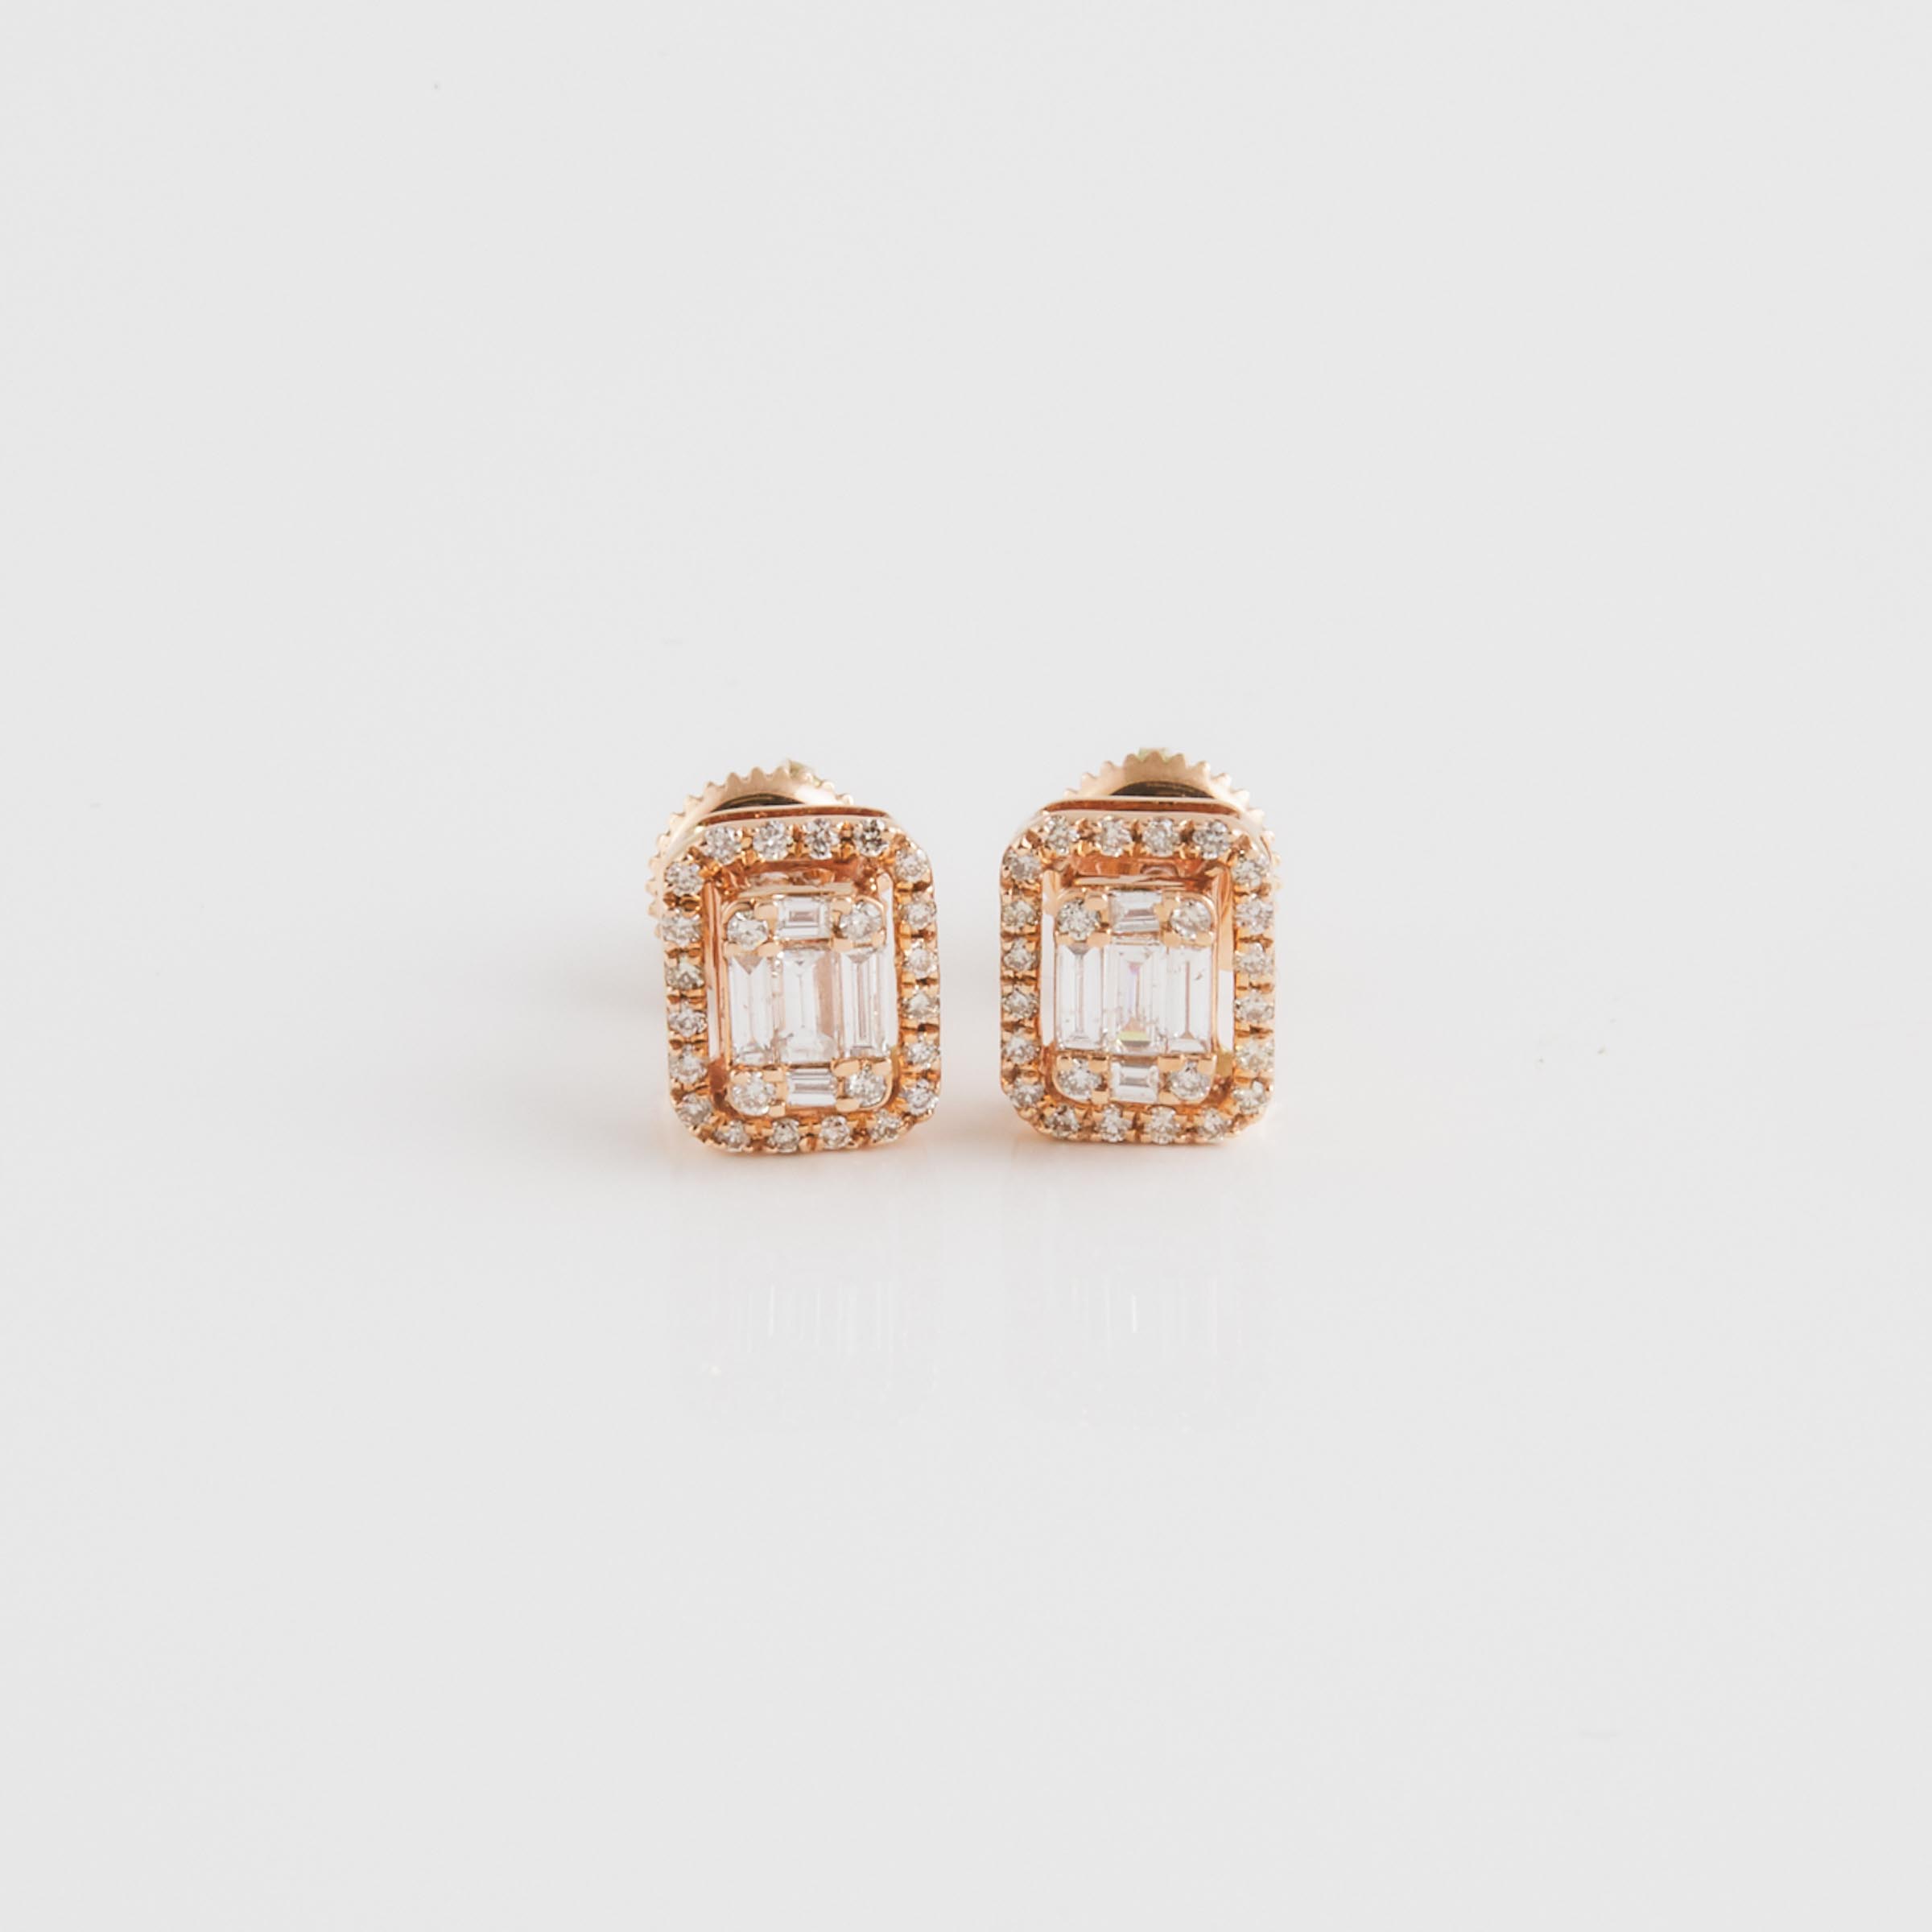 Pair Of 10k Rose Gold Earrings